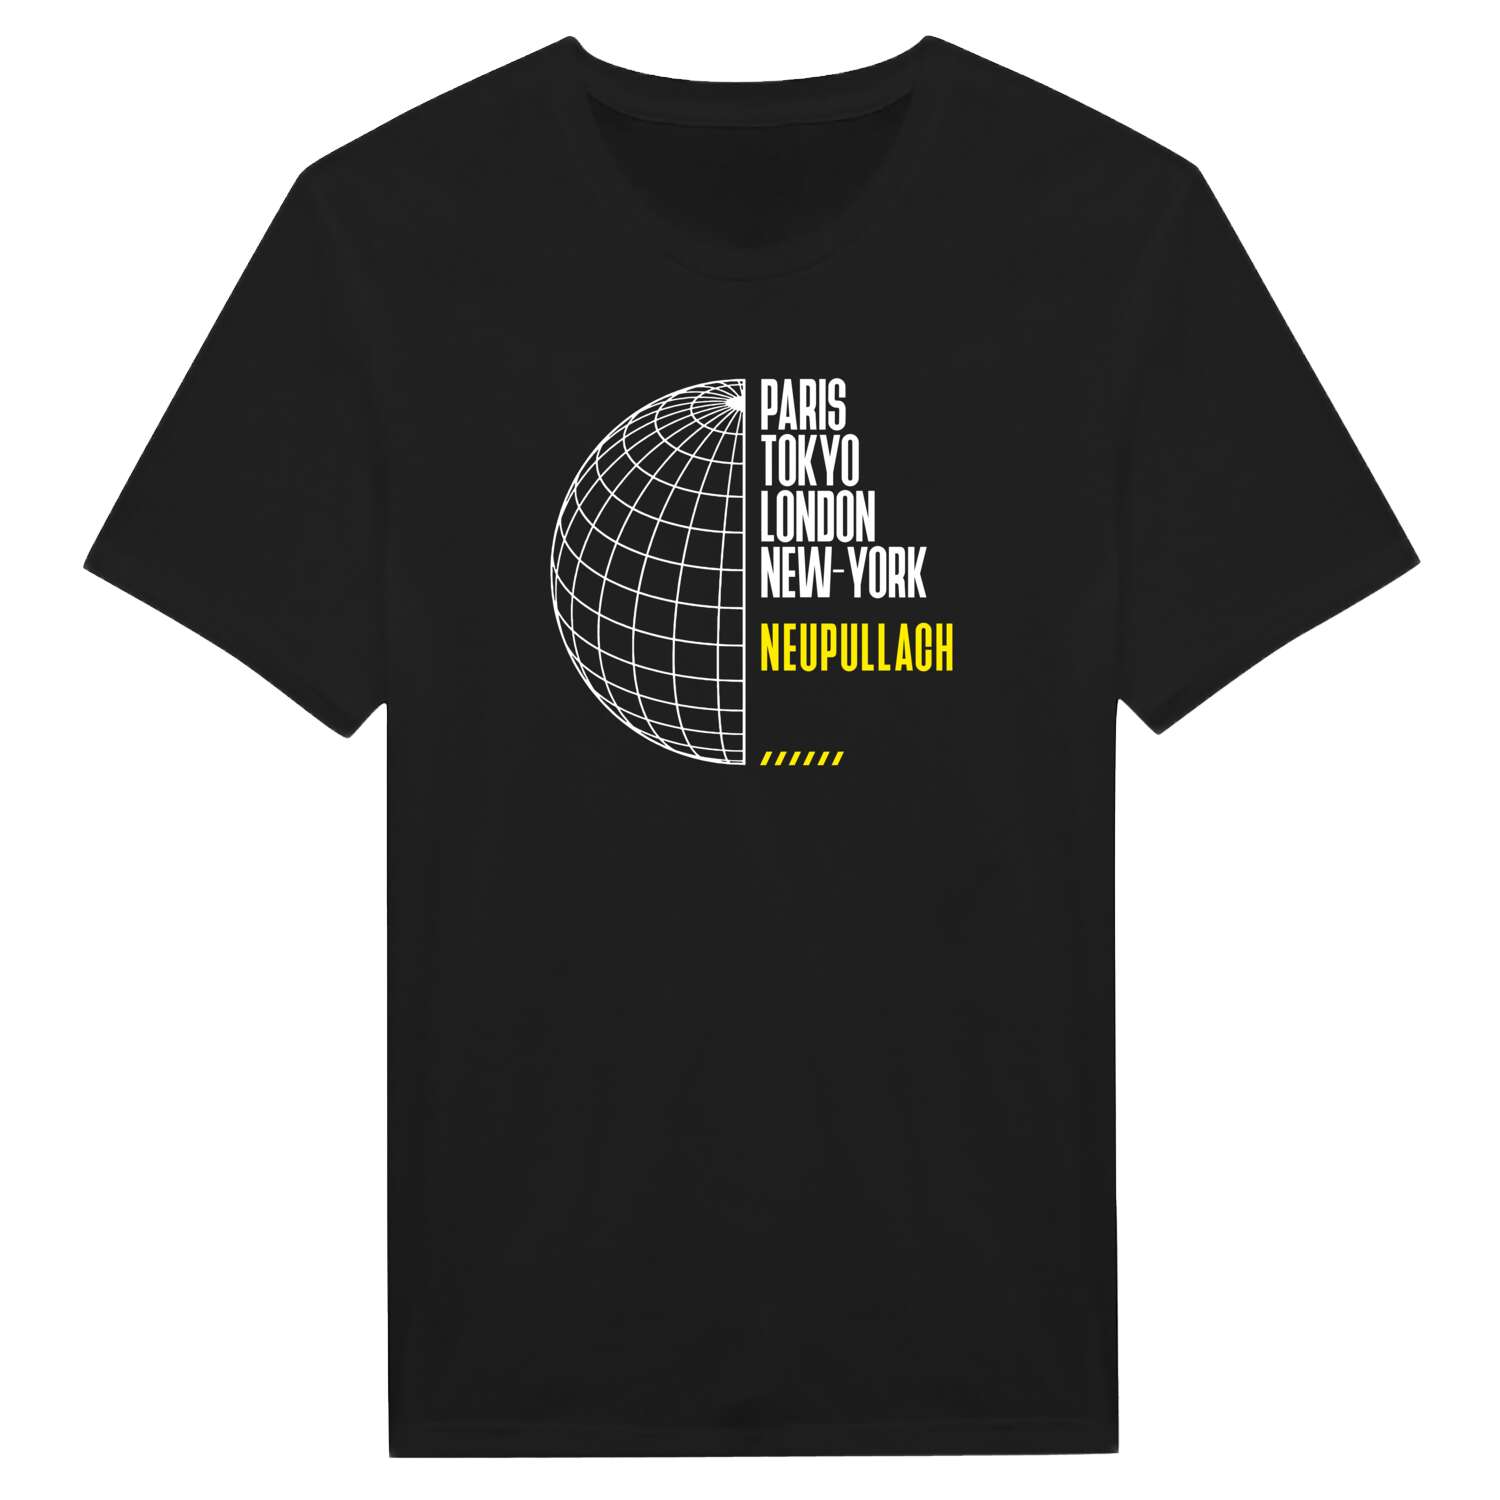 Neupullach T-Shirt »Paris Tokyo London«